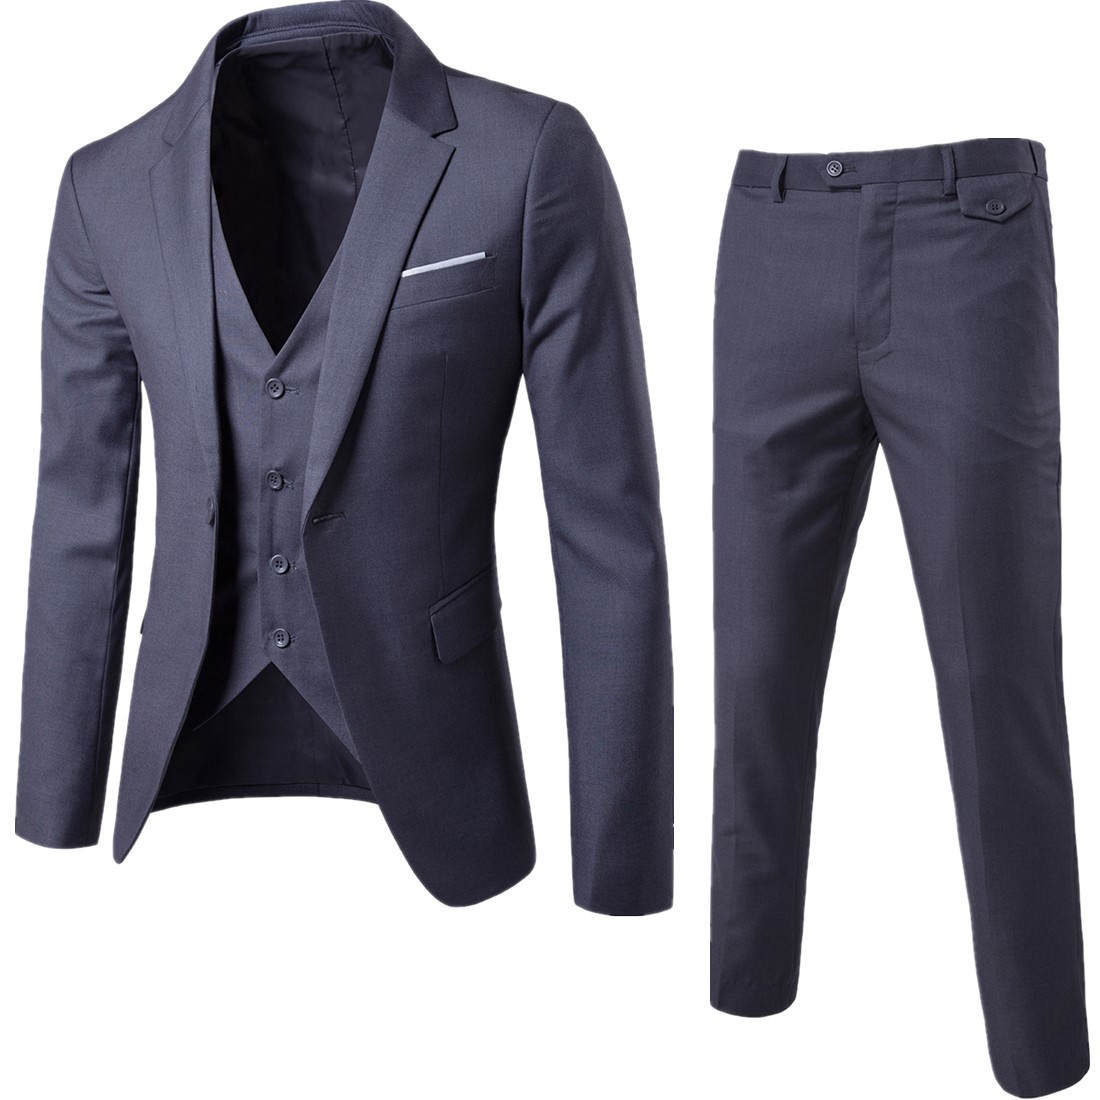 Professional suit suit men's Korean slim suit formal groom dress bridegroom wedding dress two piece set